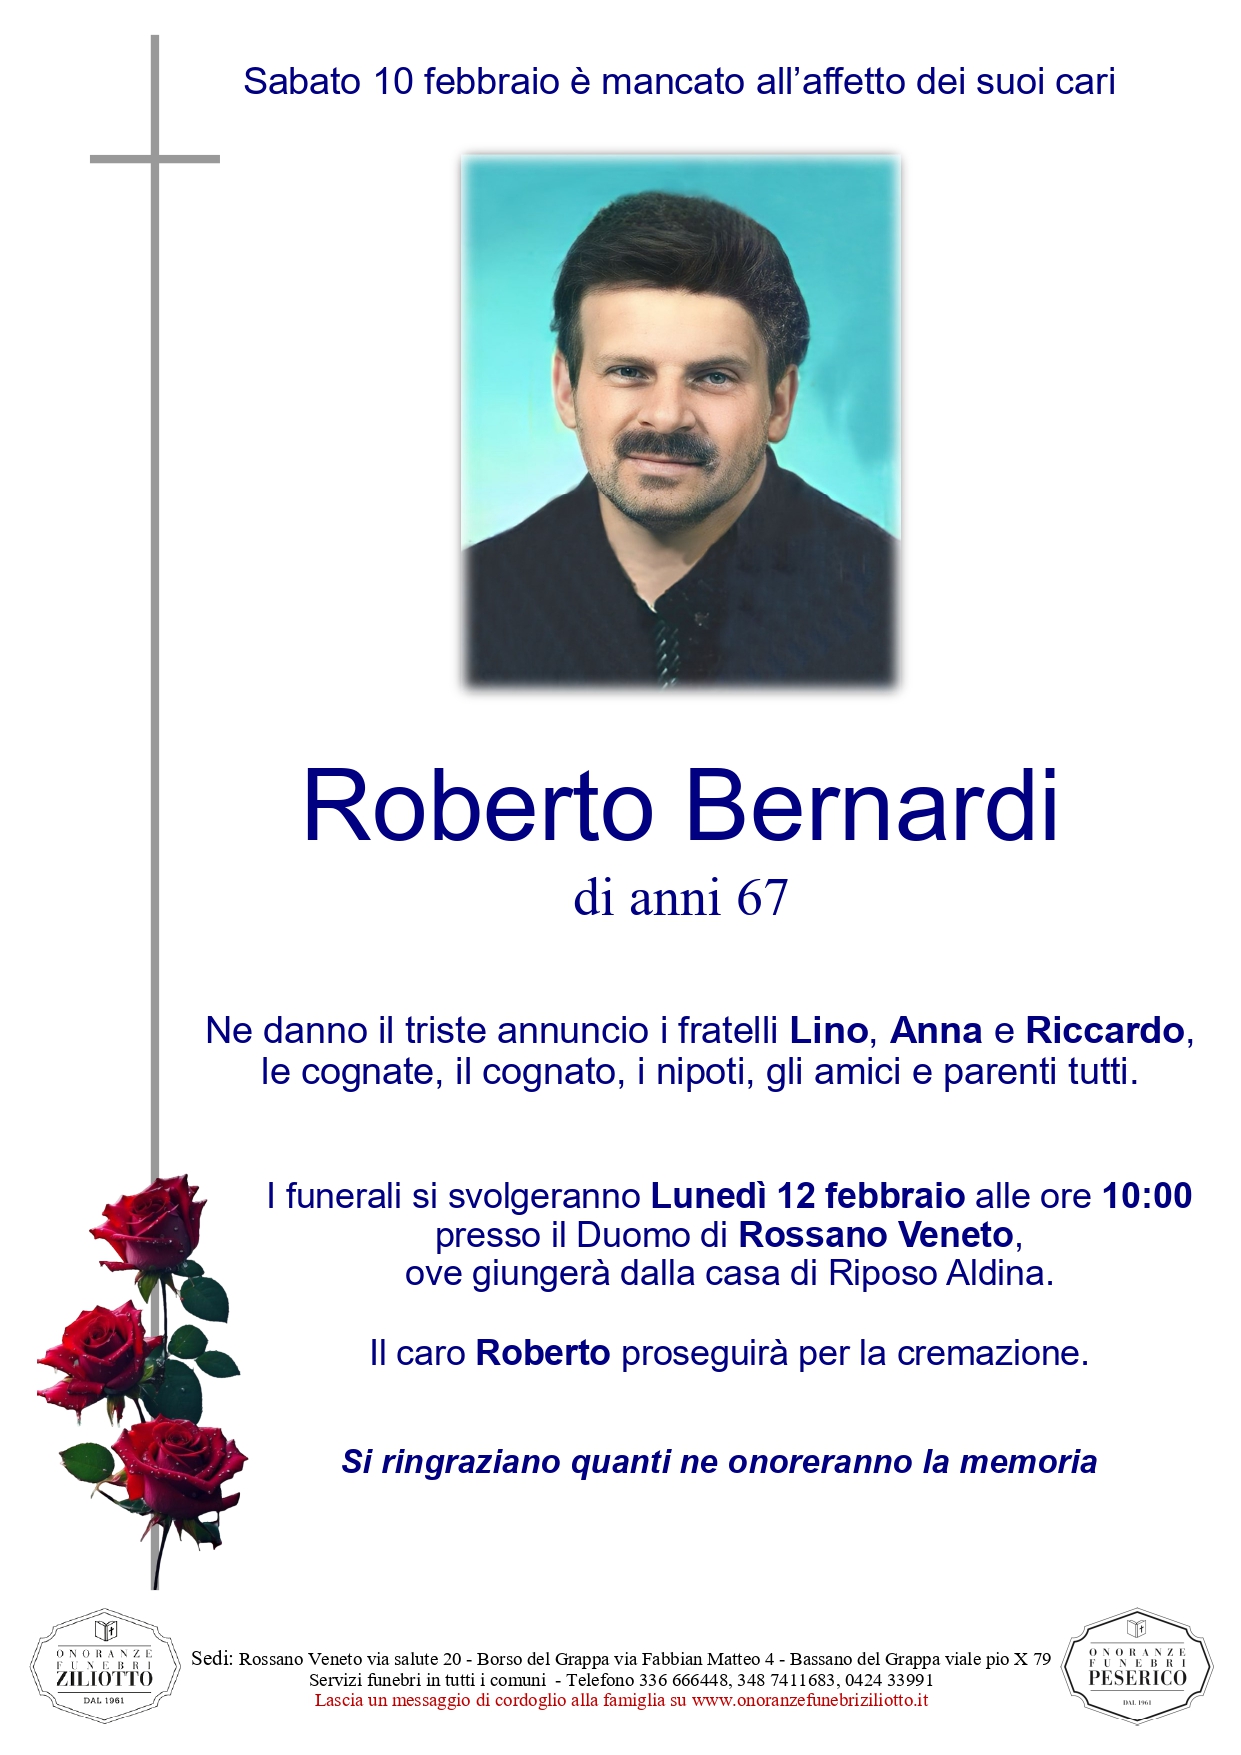 Roberto Bernardi - 67 anni - Rossano Veneto